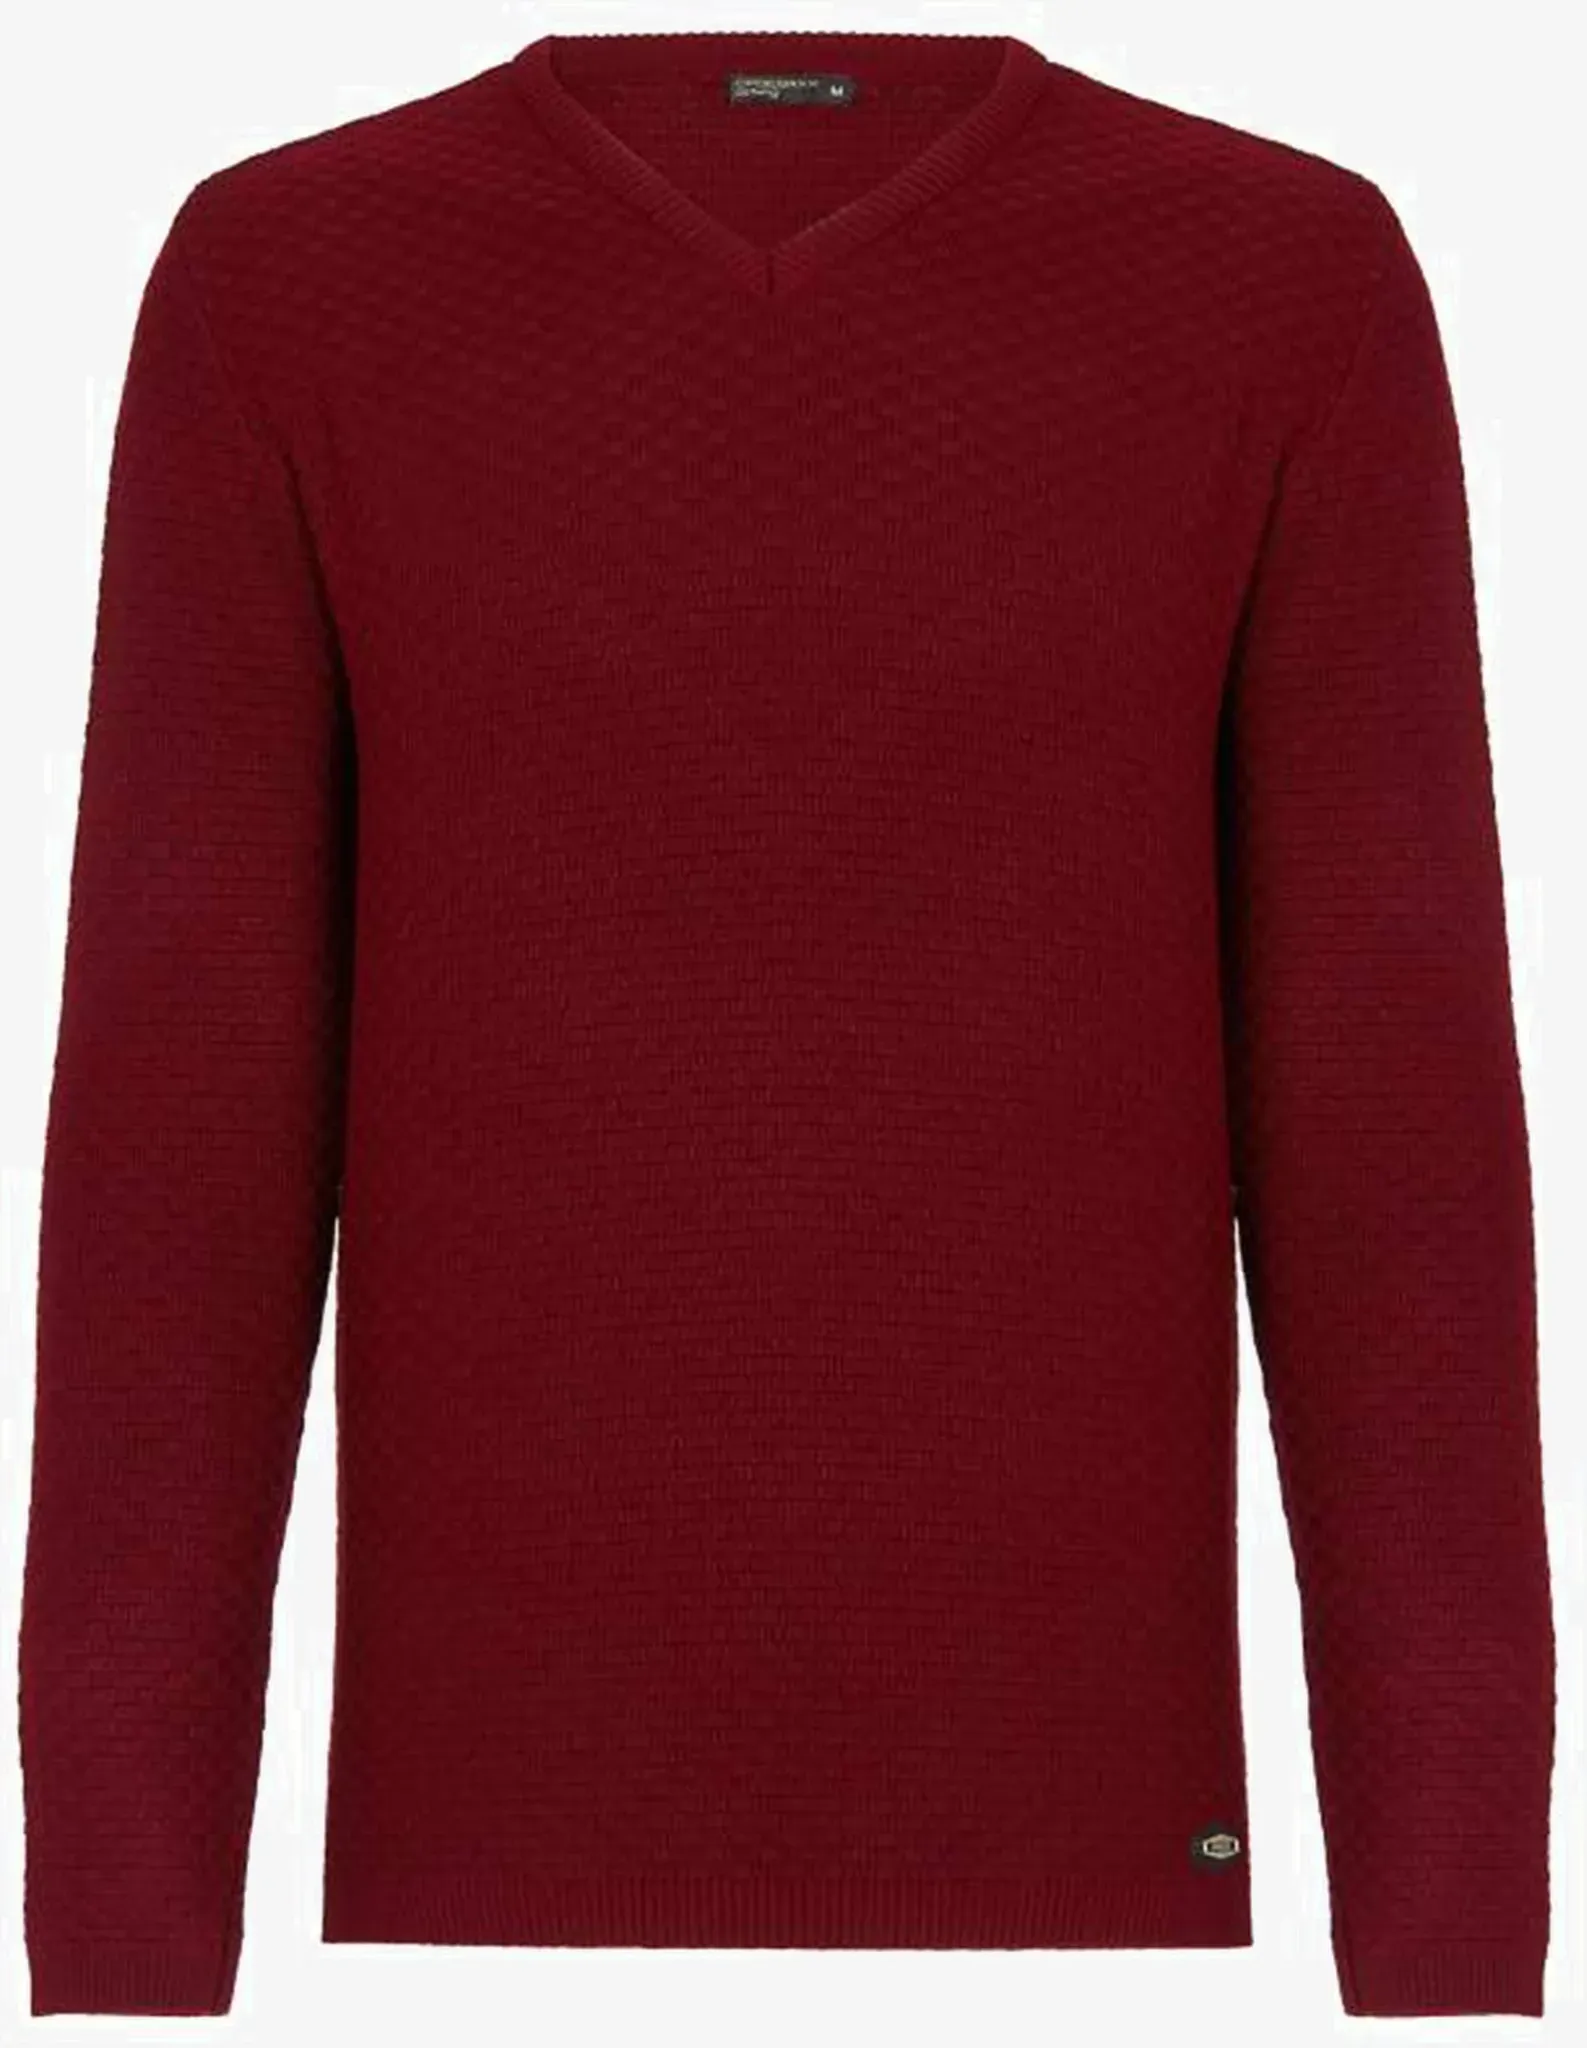 V-Ausschnitt-Pullover CIPO & BAXX Gr. S, rot Herren Pullover V-Ausschnitt-Pullover mit modischem V-Ausschnitt